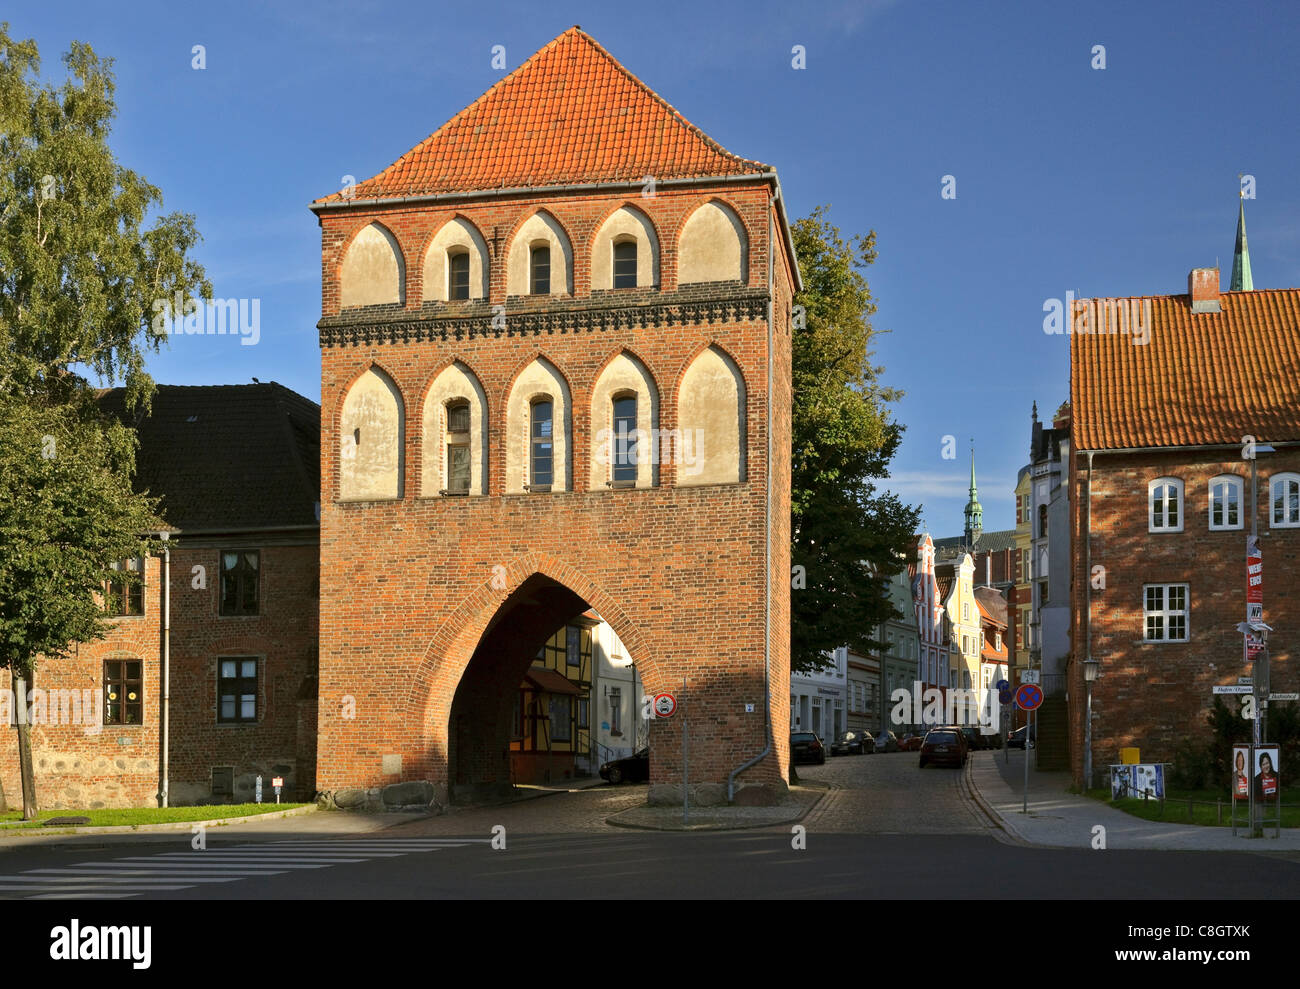 Kniepertor Gate, Stralsund, Mecklembourg-Poméranie-Occidentale, Allemagne, Europe Banque D'Images